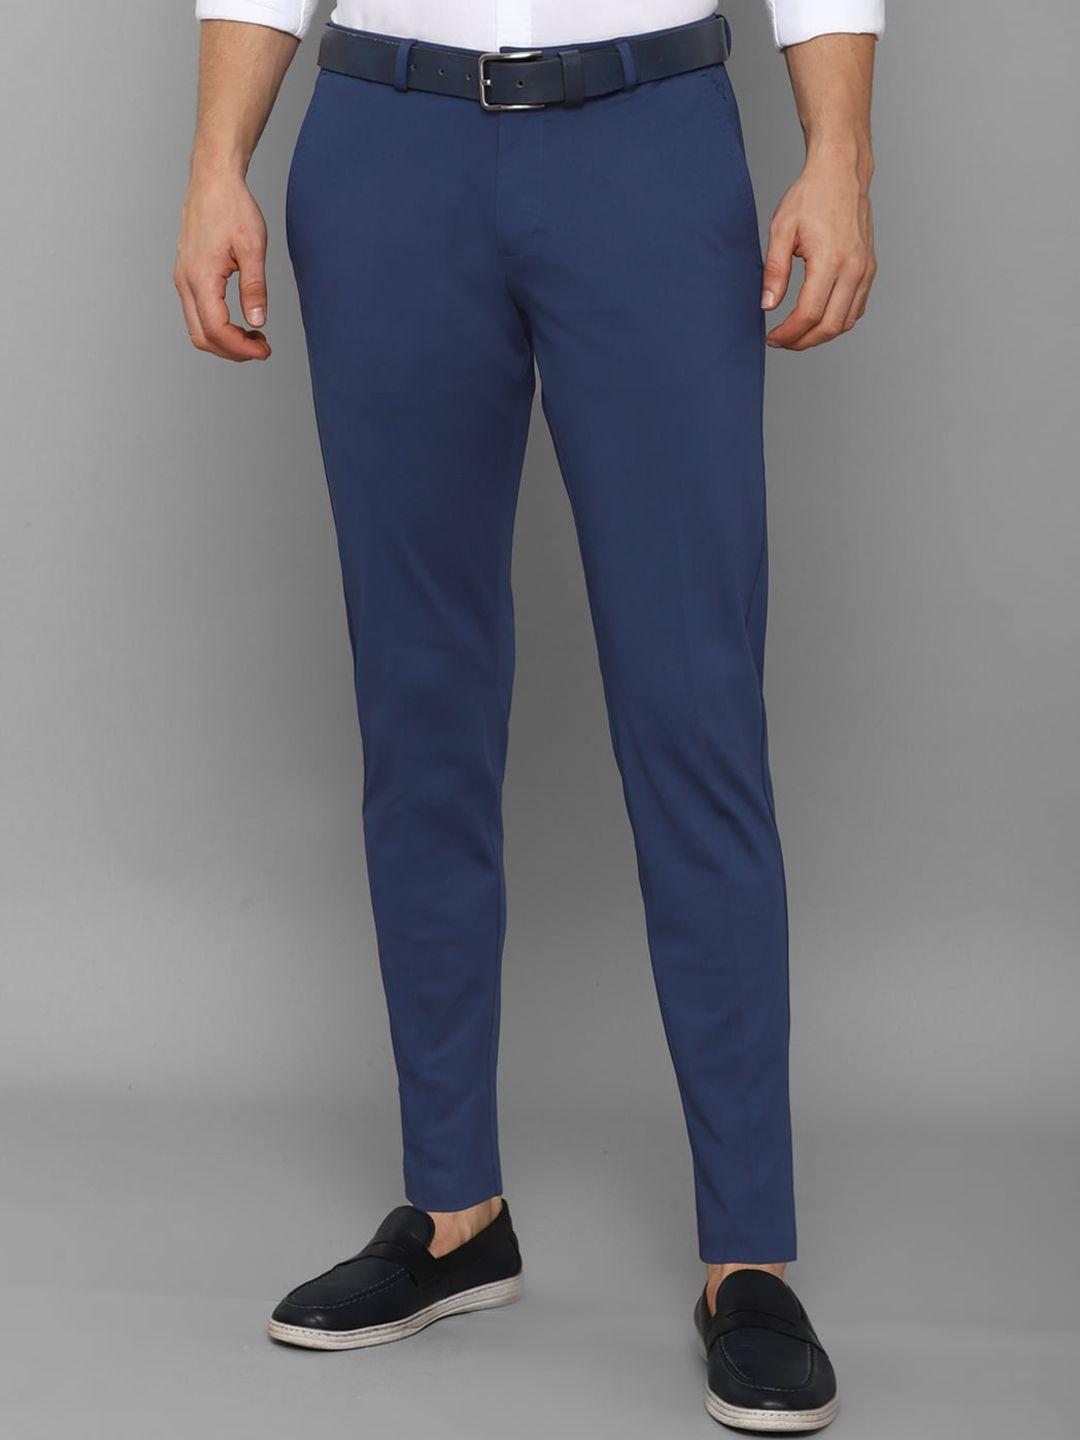 allen solly men navy blue slim fit trousers